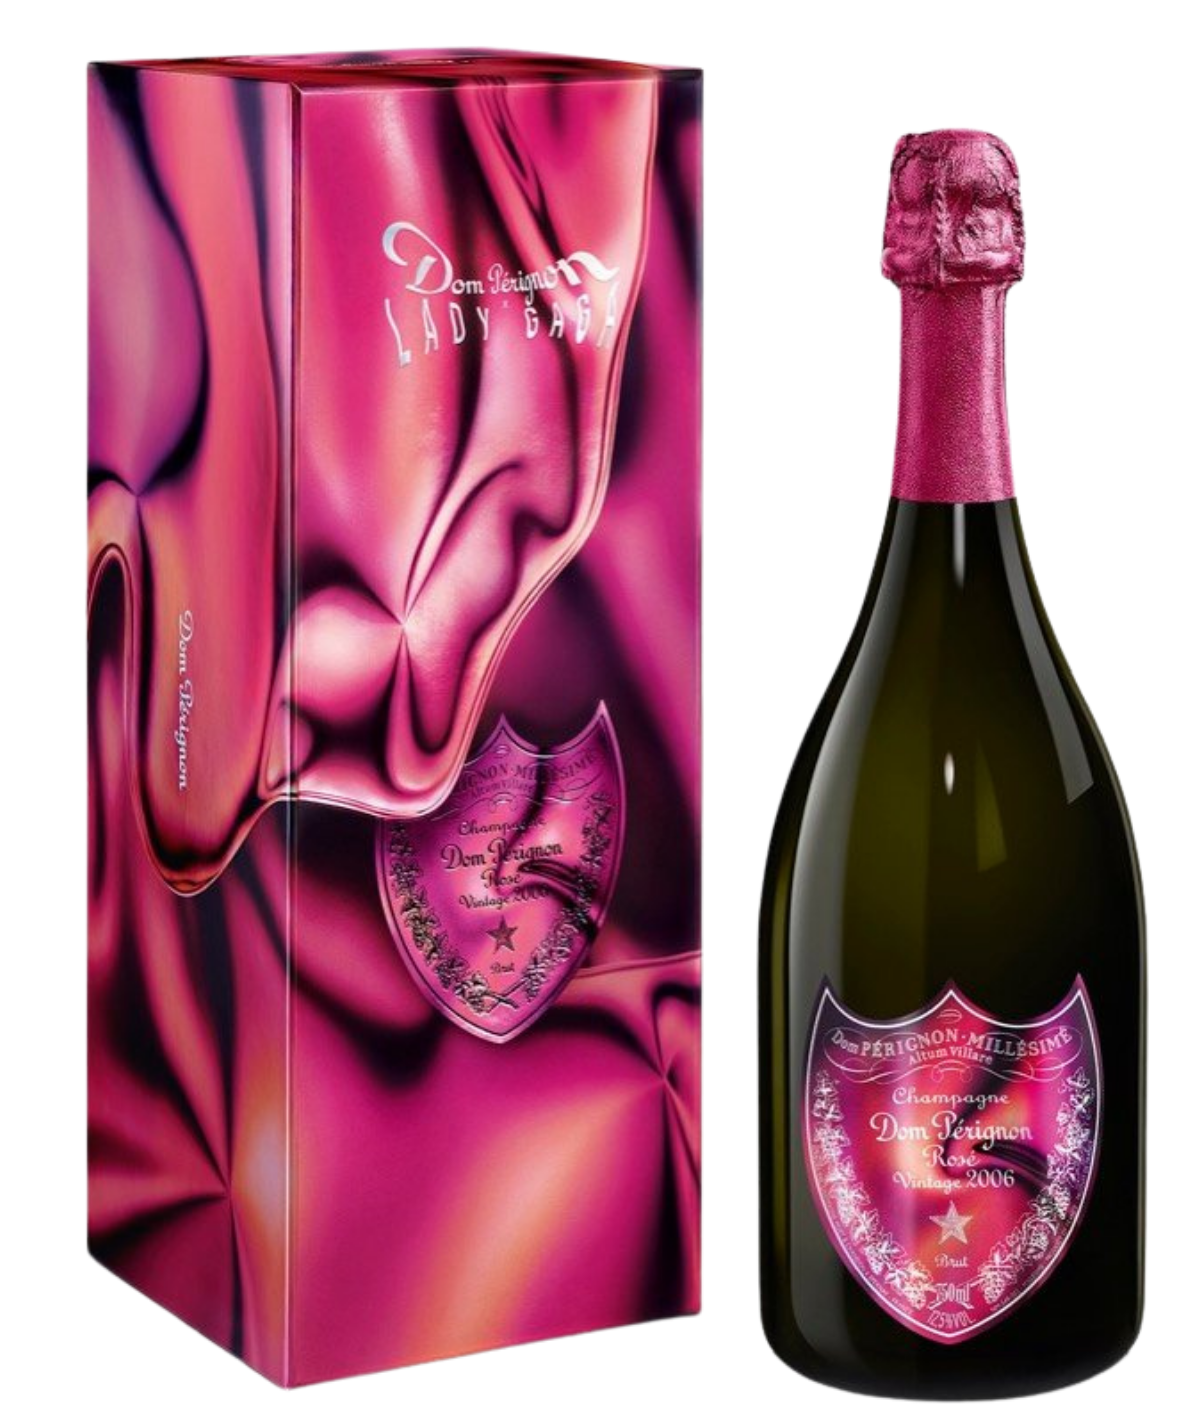 DOM PERIGNON champagne Limited Edition Lady Gaga Rosé 2006 vintage